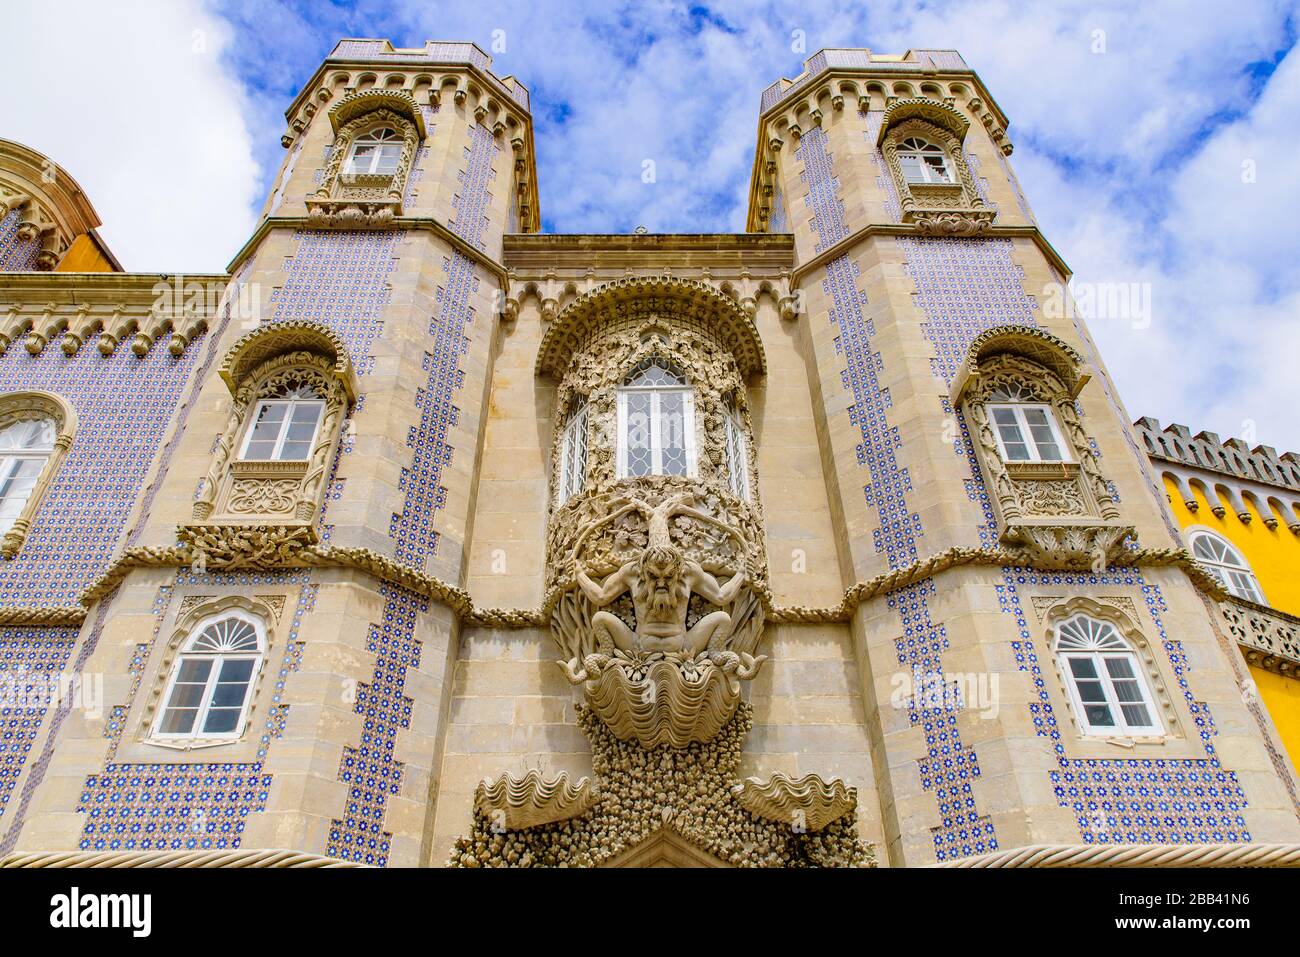 Pena Palace, ein romantizistisches Schloss in Sintra, Portugal Stockfoto